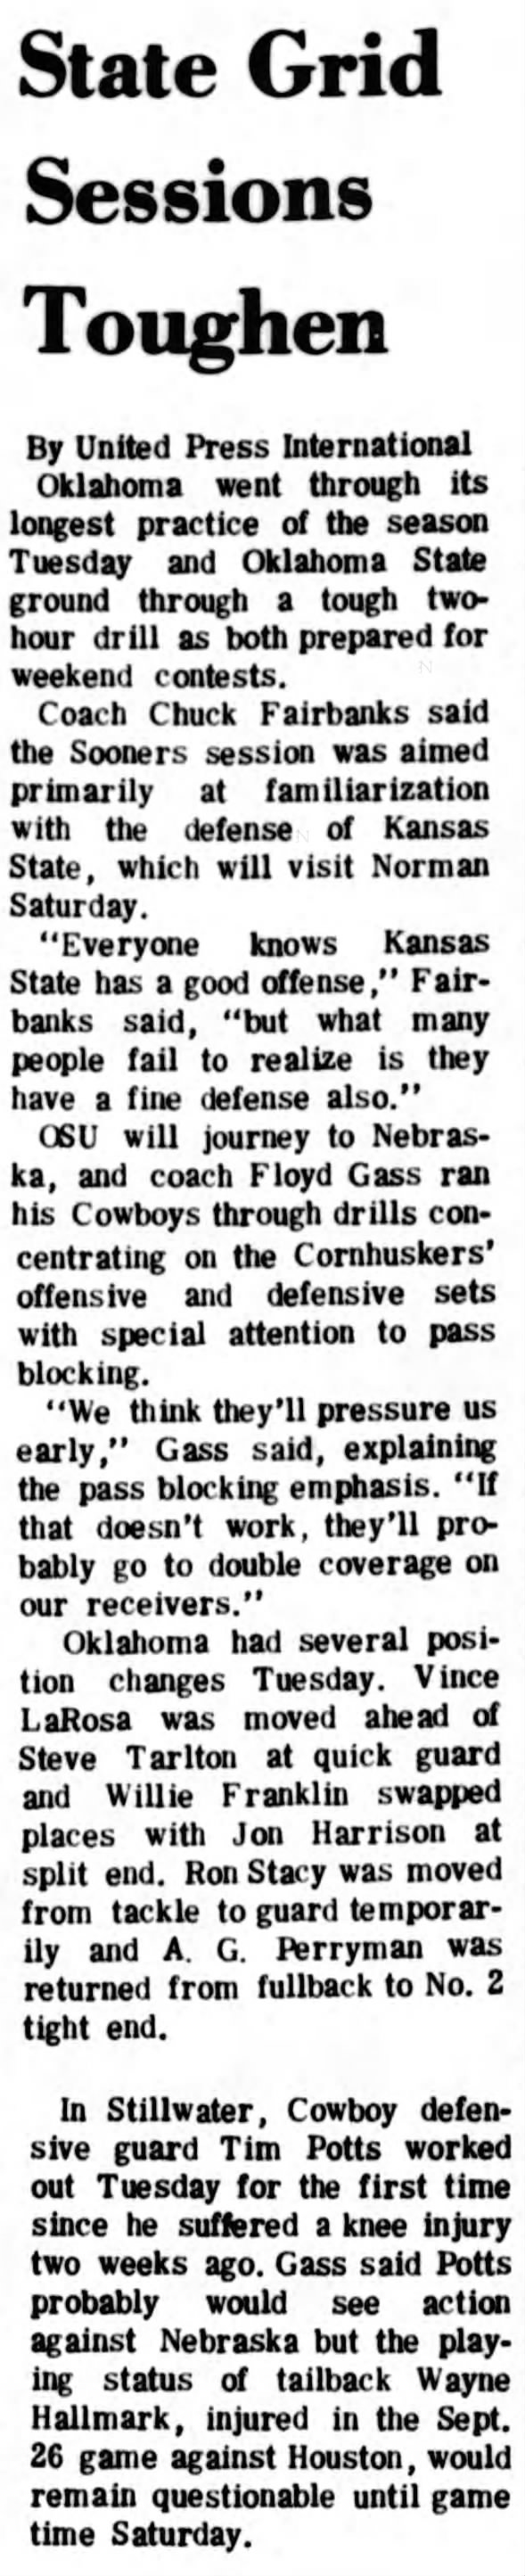 1970.10.20 Oklahoma State practice Tuesday